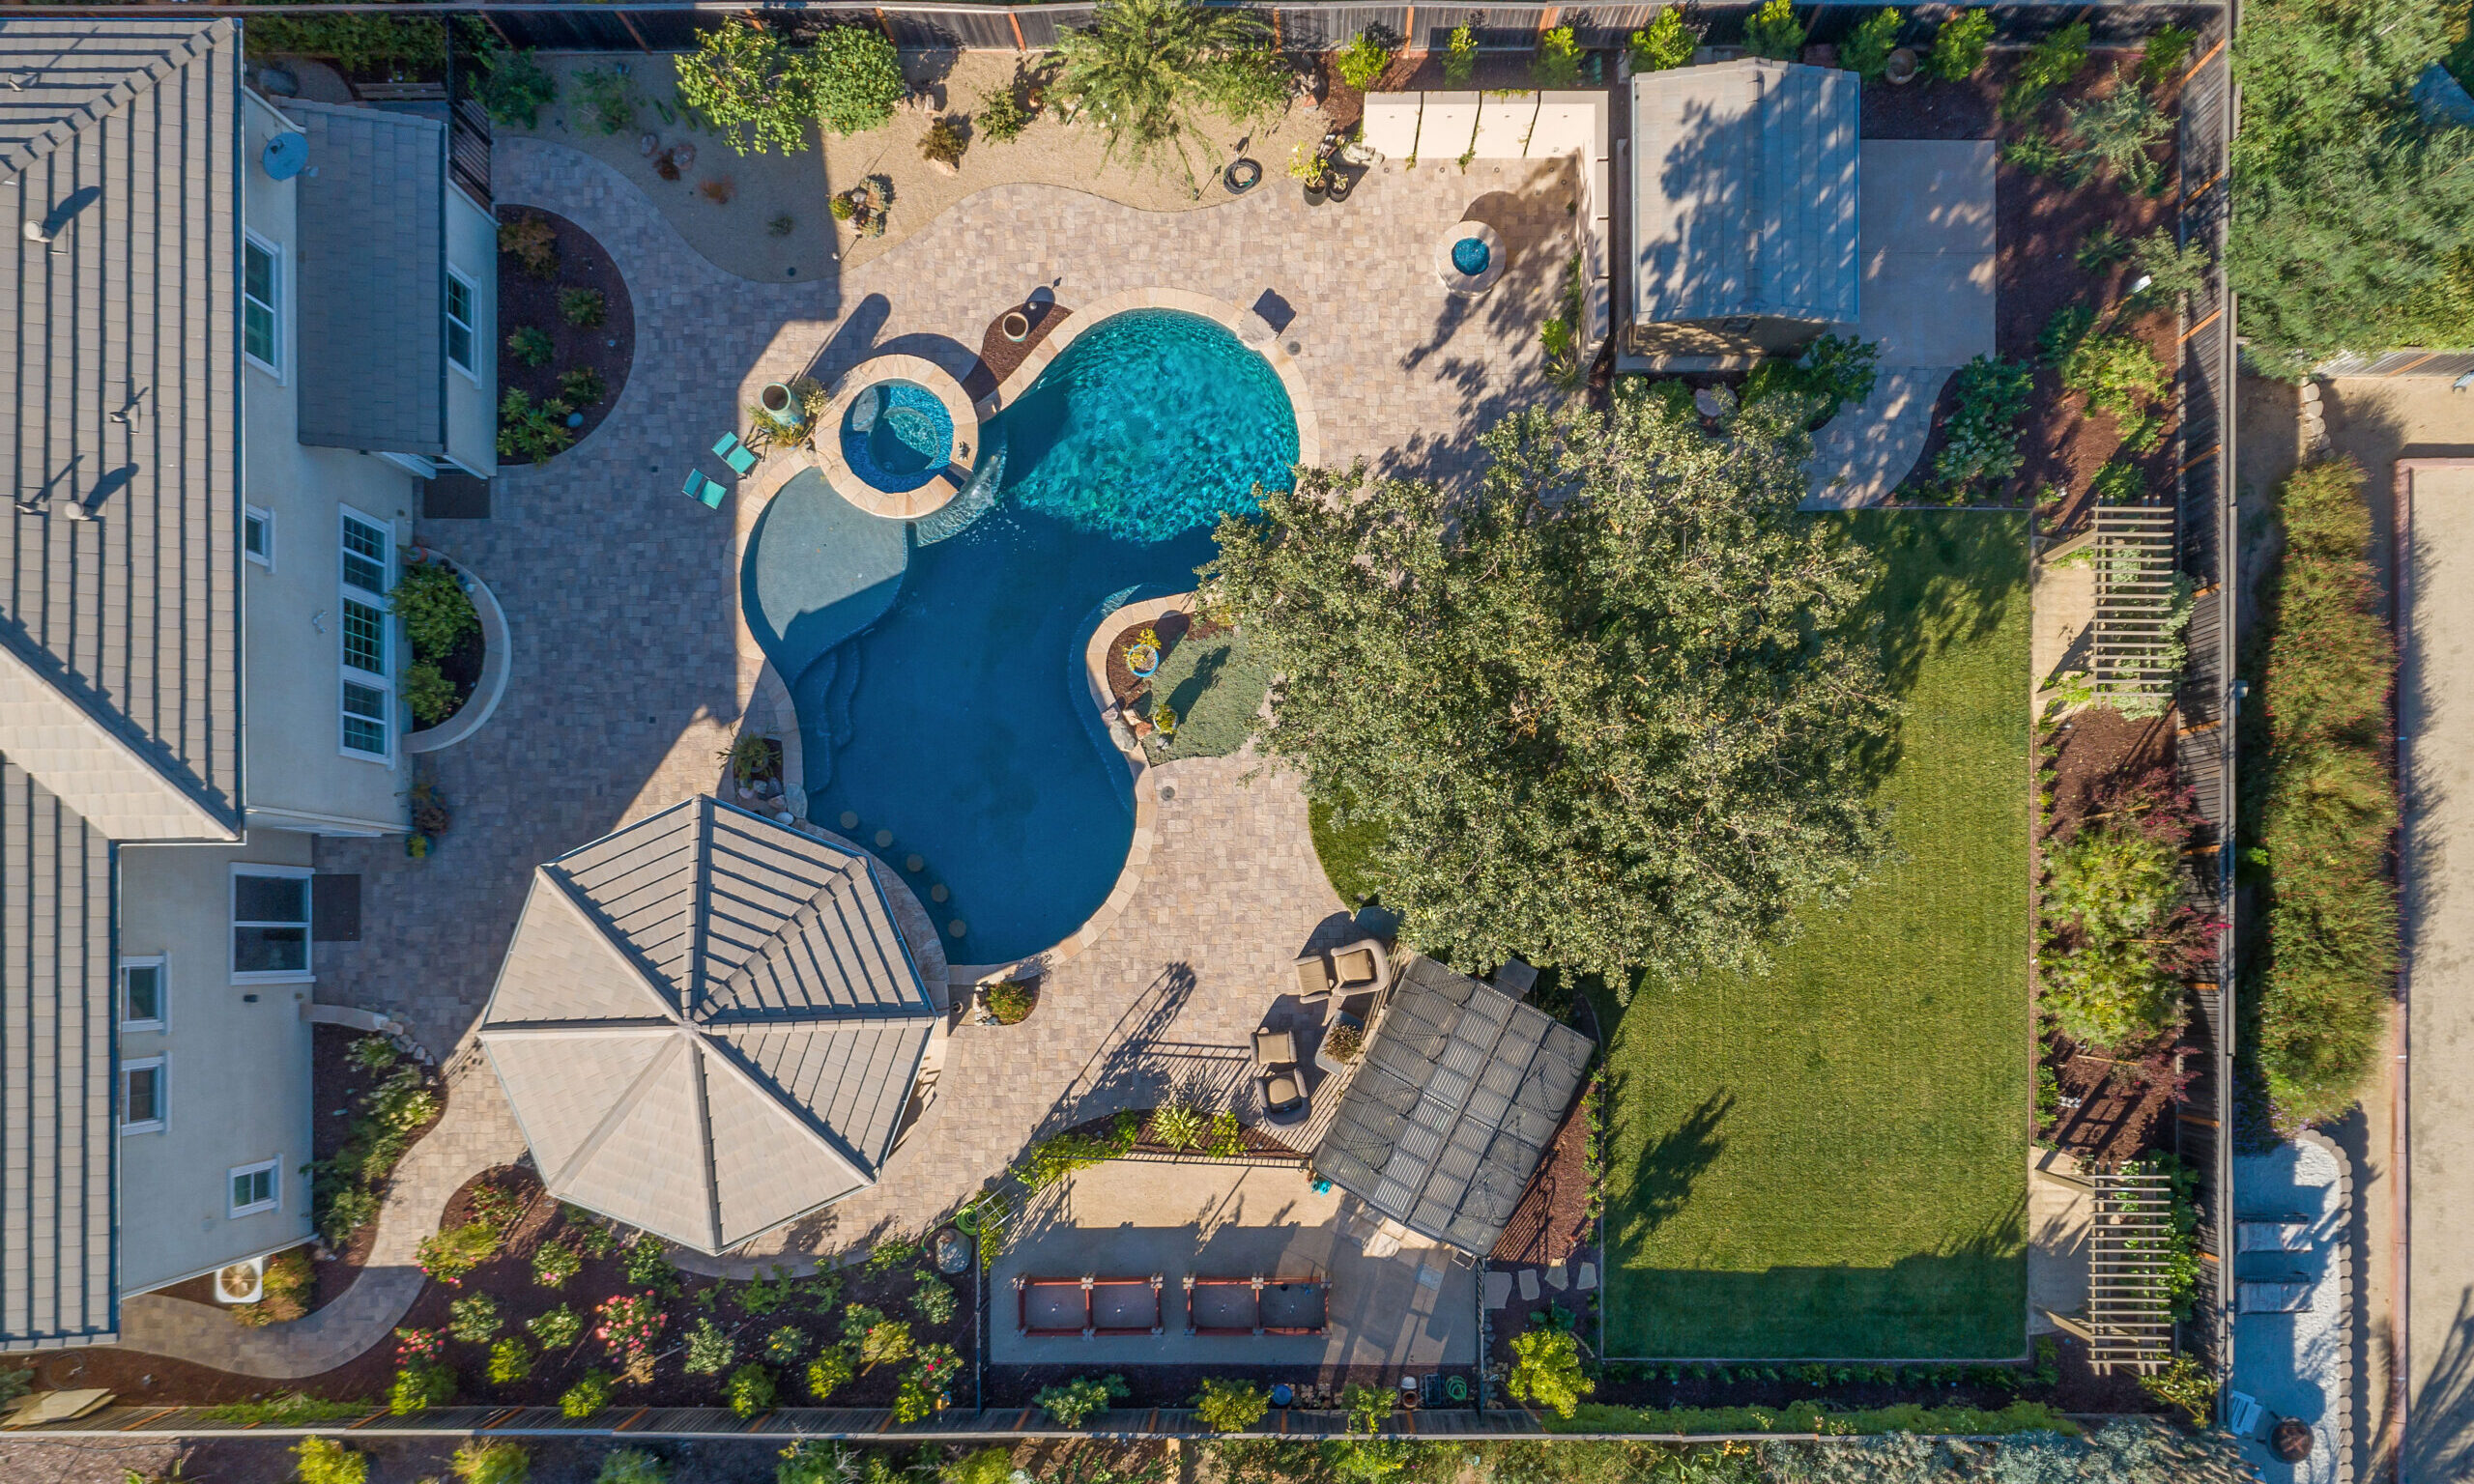 Backyard pool design